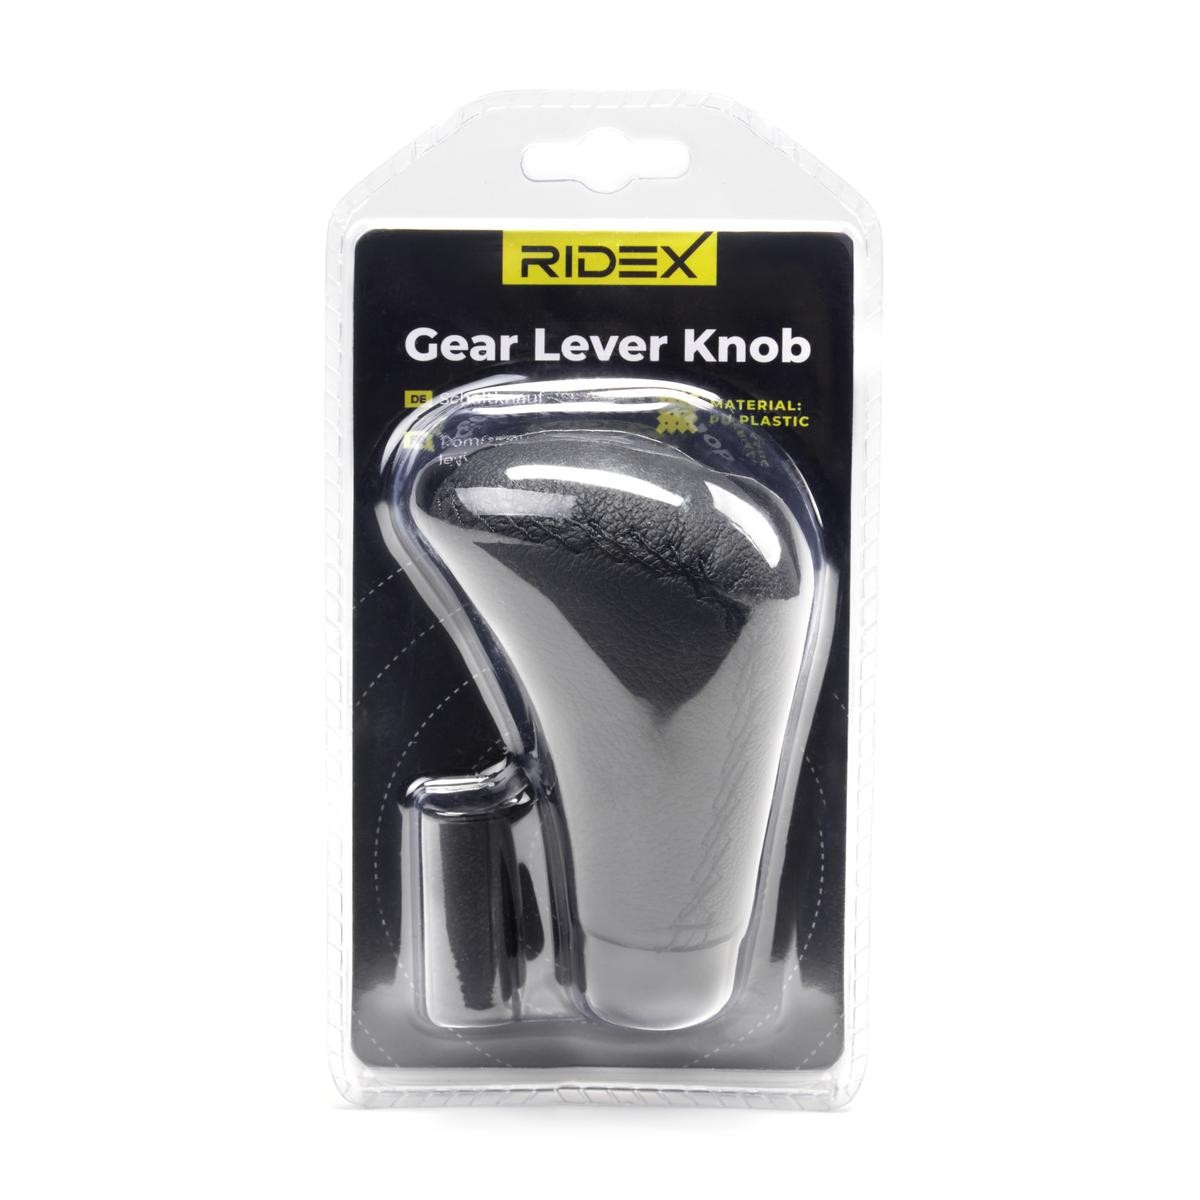 Image of RIDEX Gear knob 3707A0020 Gearbox knob,Gear stick knob,Shift knob,Gear shift knob,Gear lever knob,Gear handle